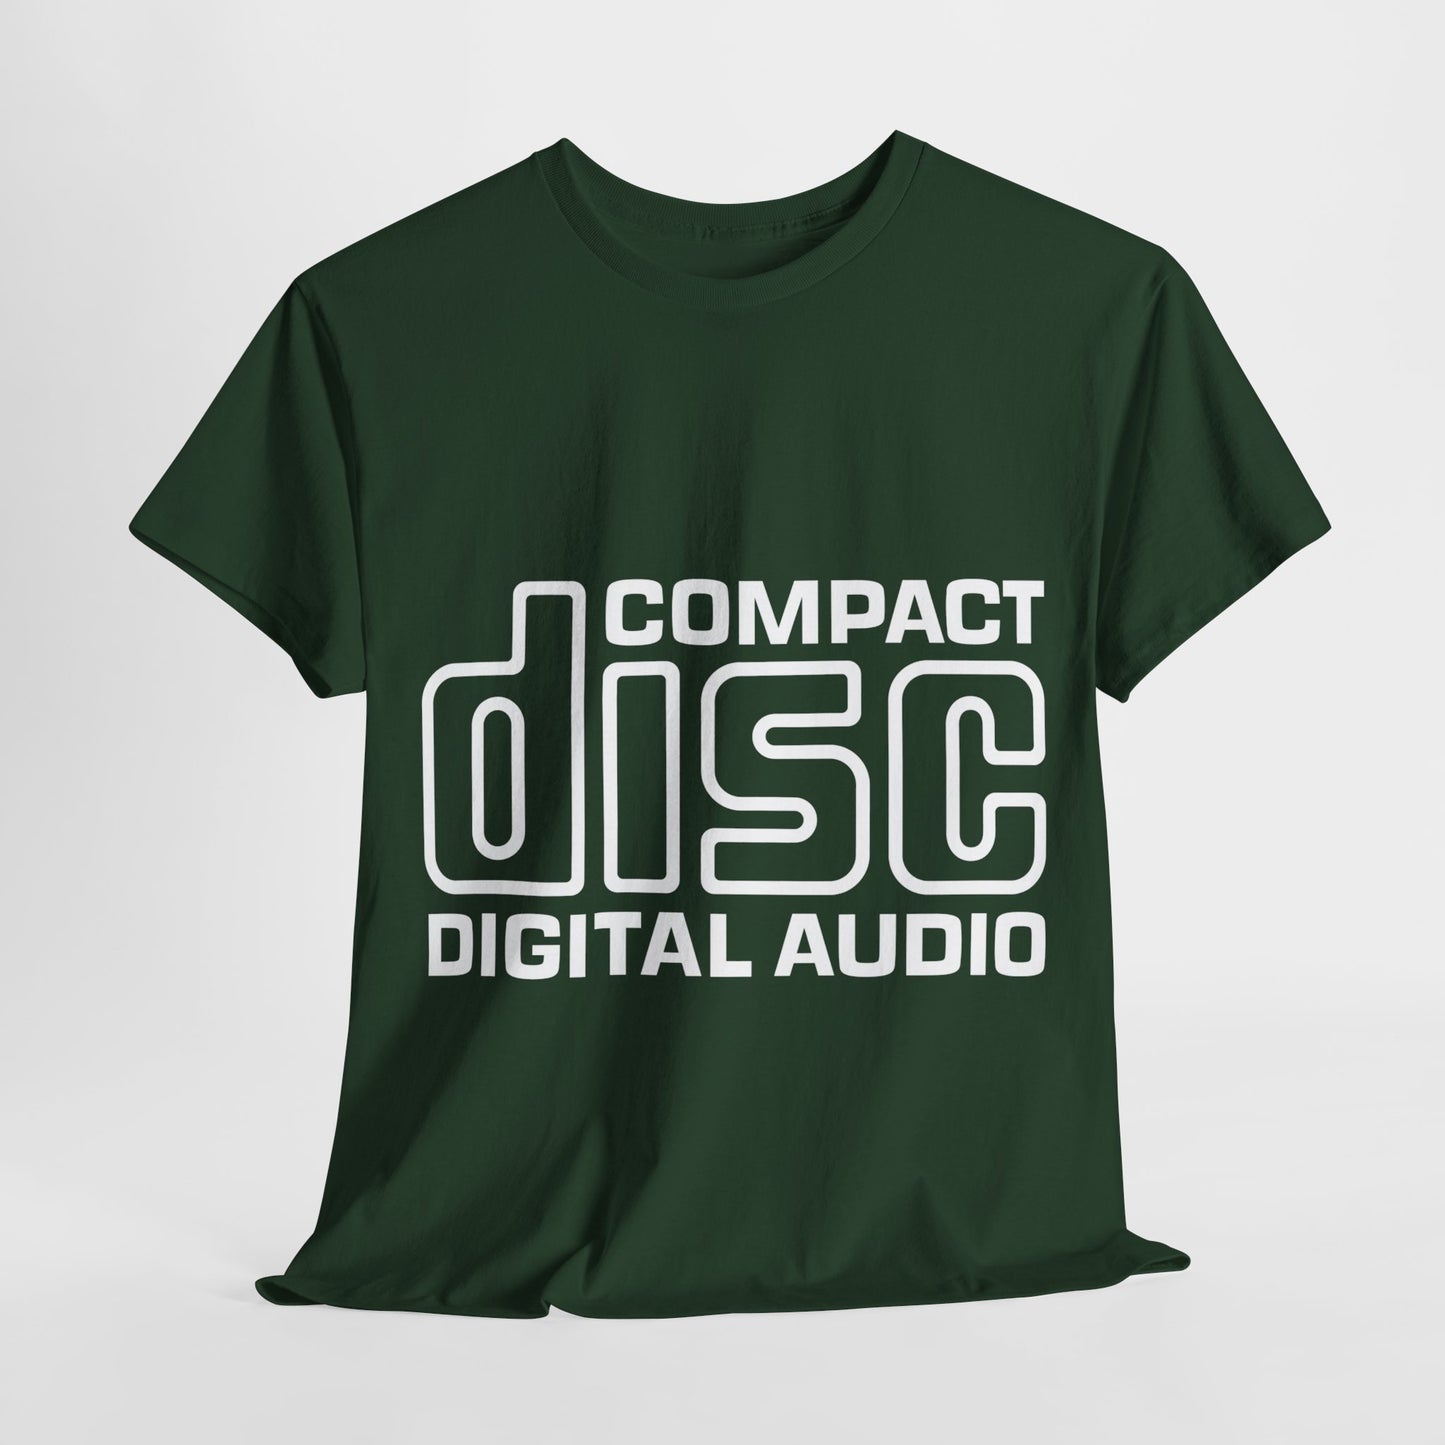 T-shirt - Compact Disc (Digital Audio)